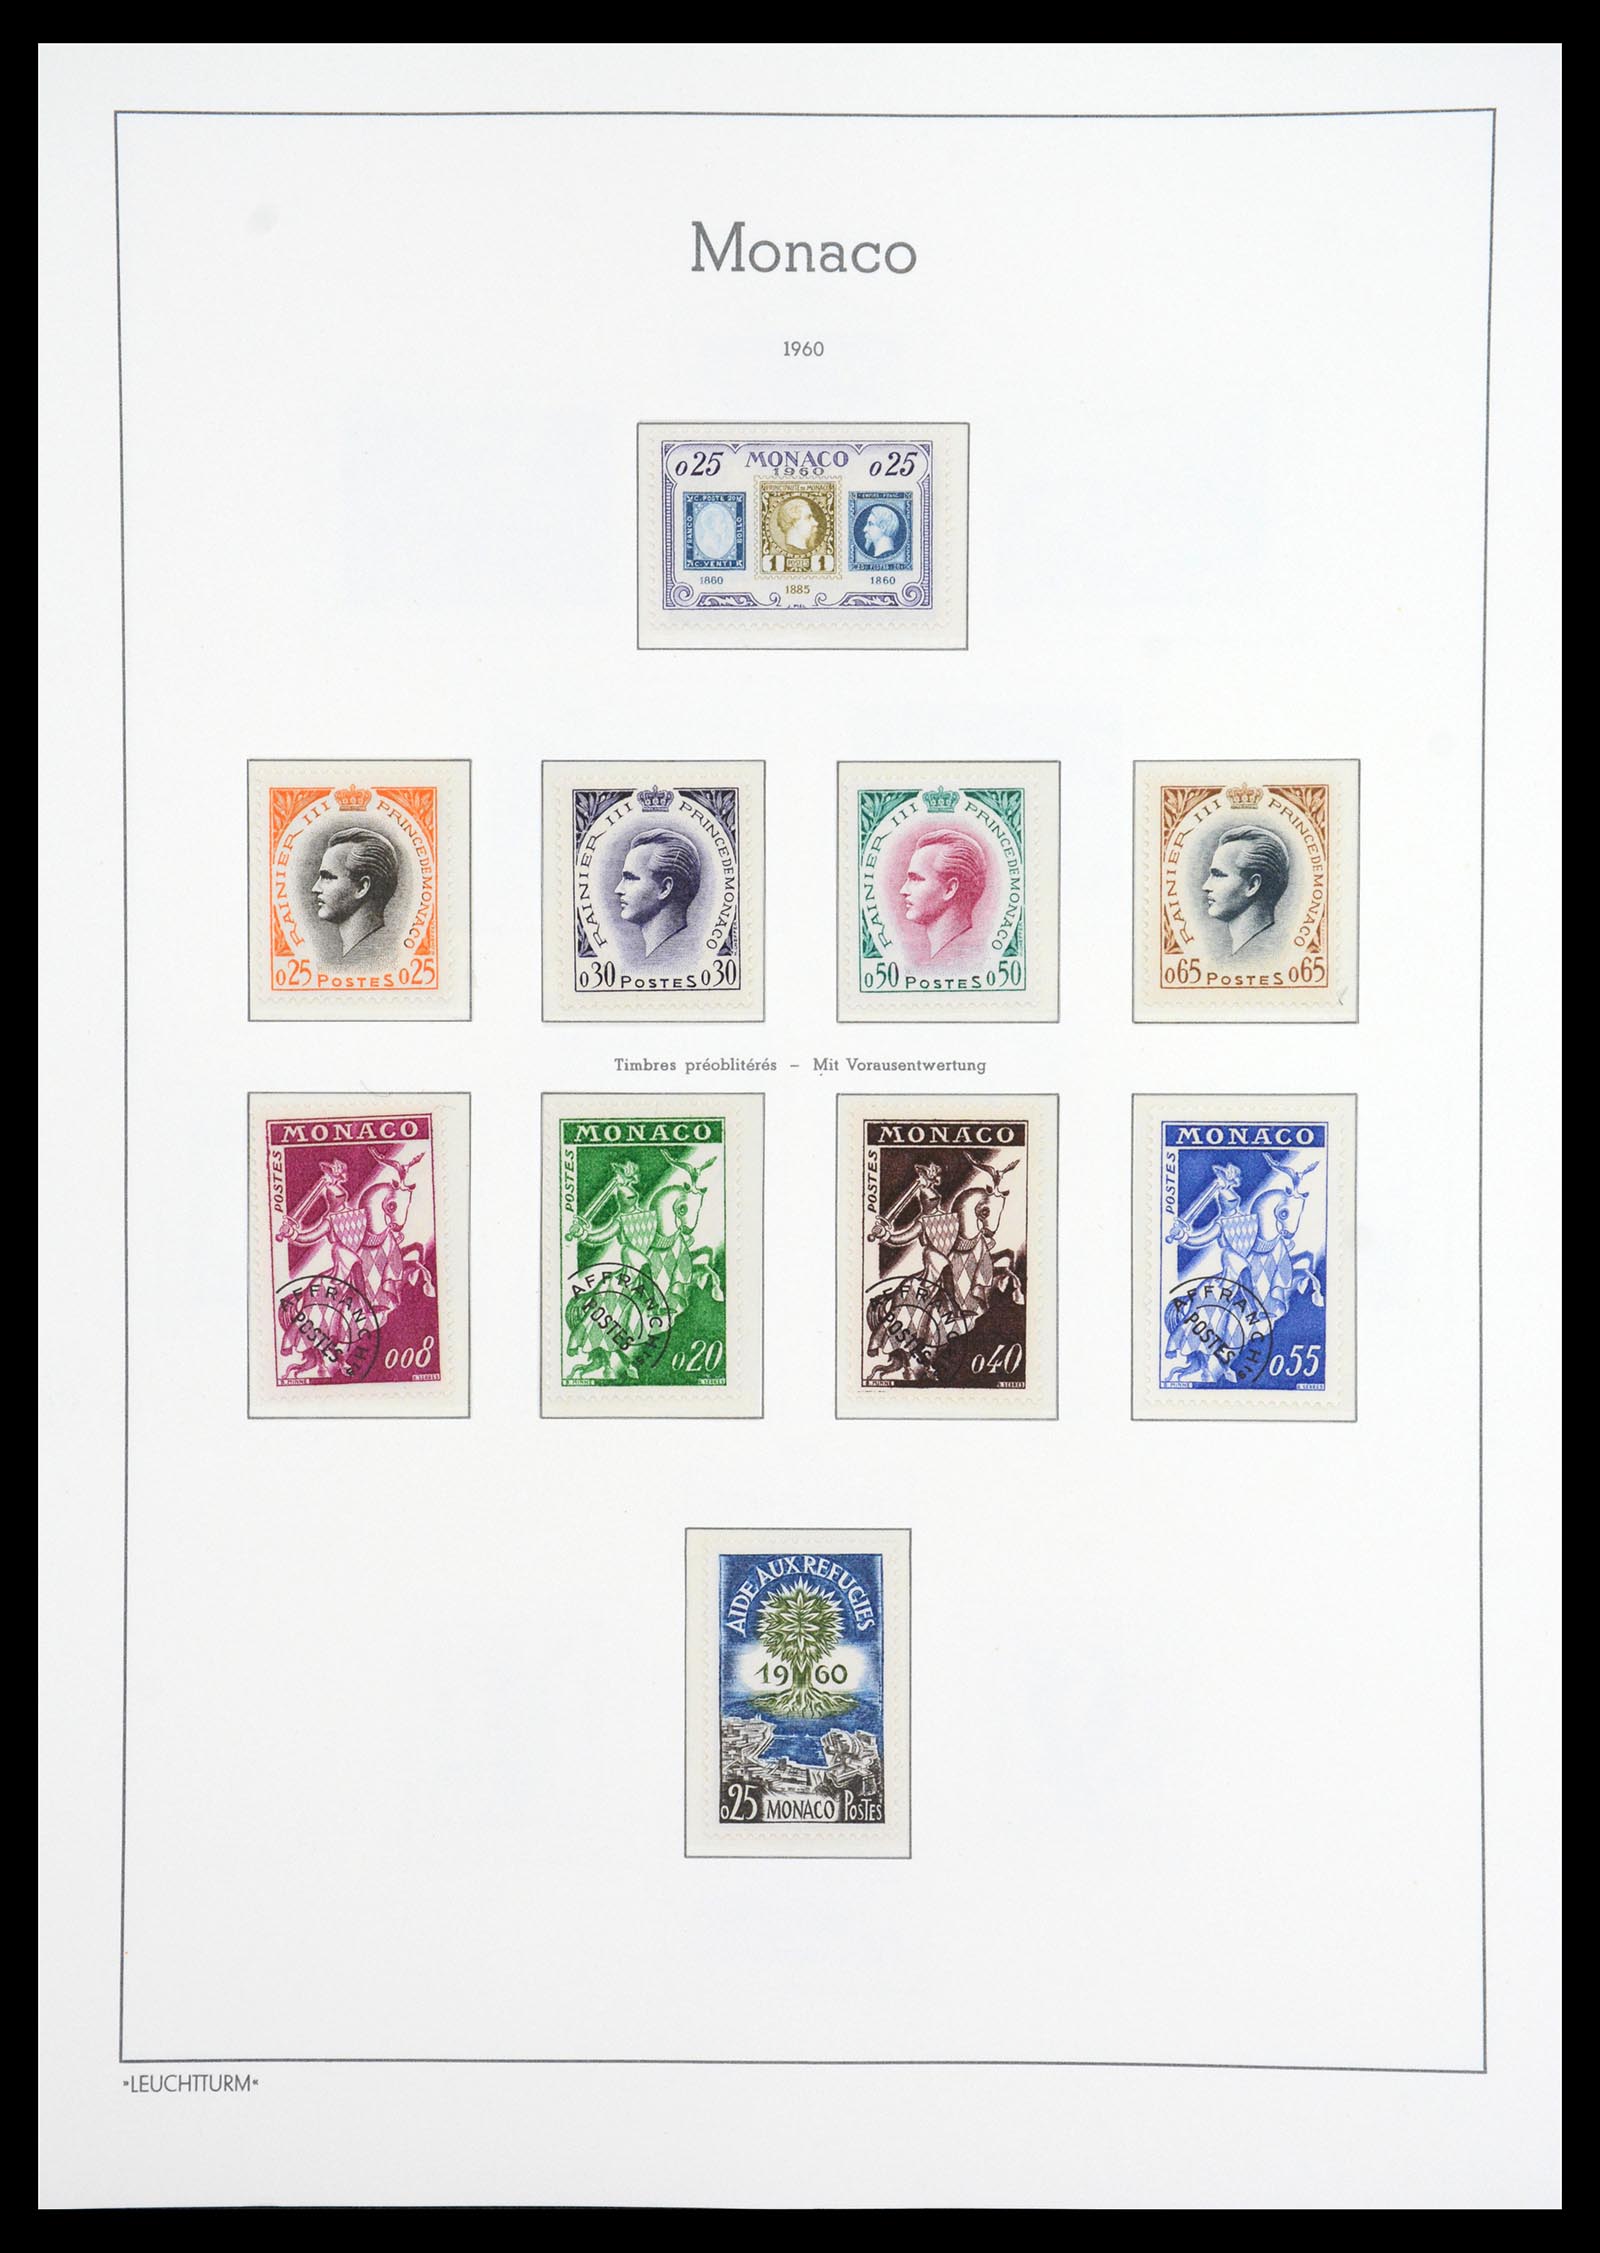 36735 072 - Stamp collection 36735 Monaco 1885-1966.